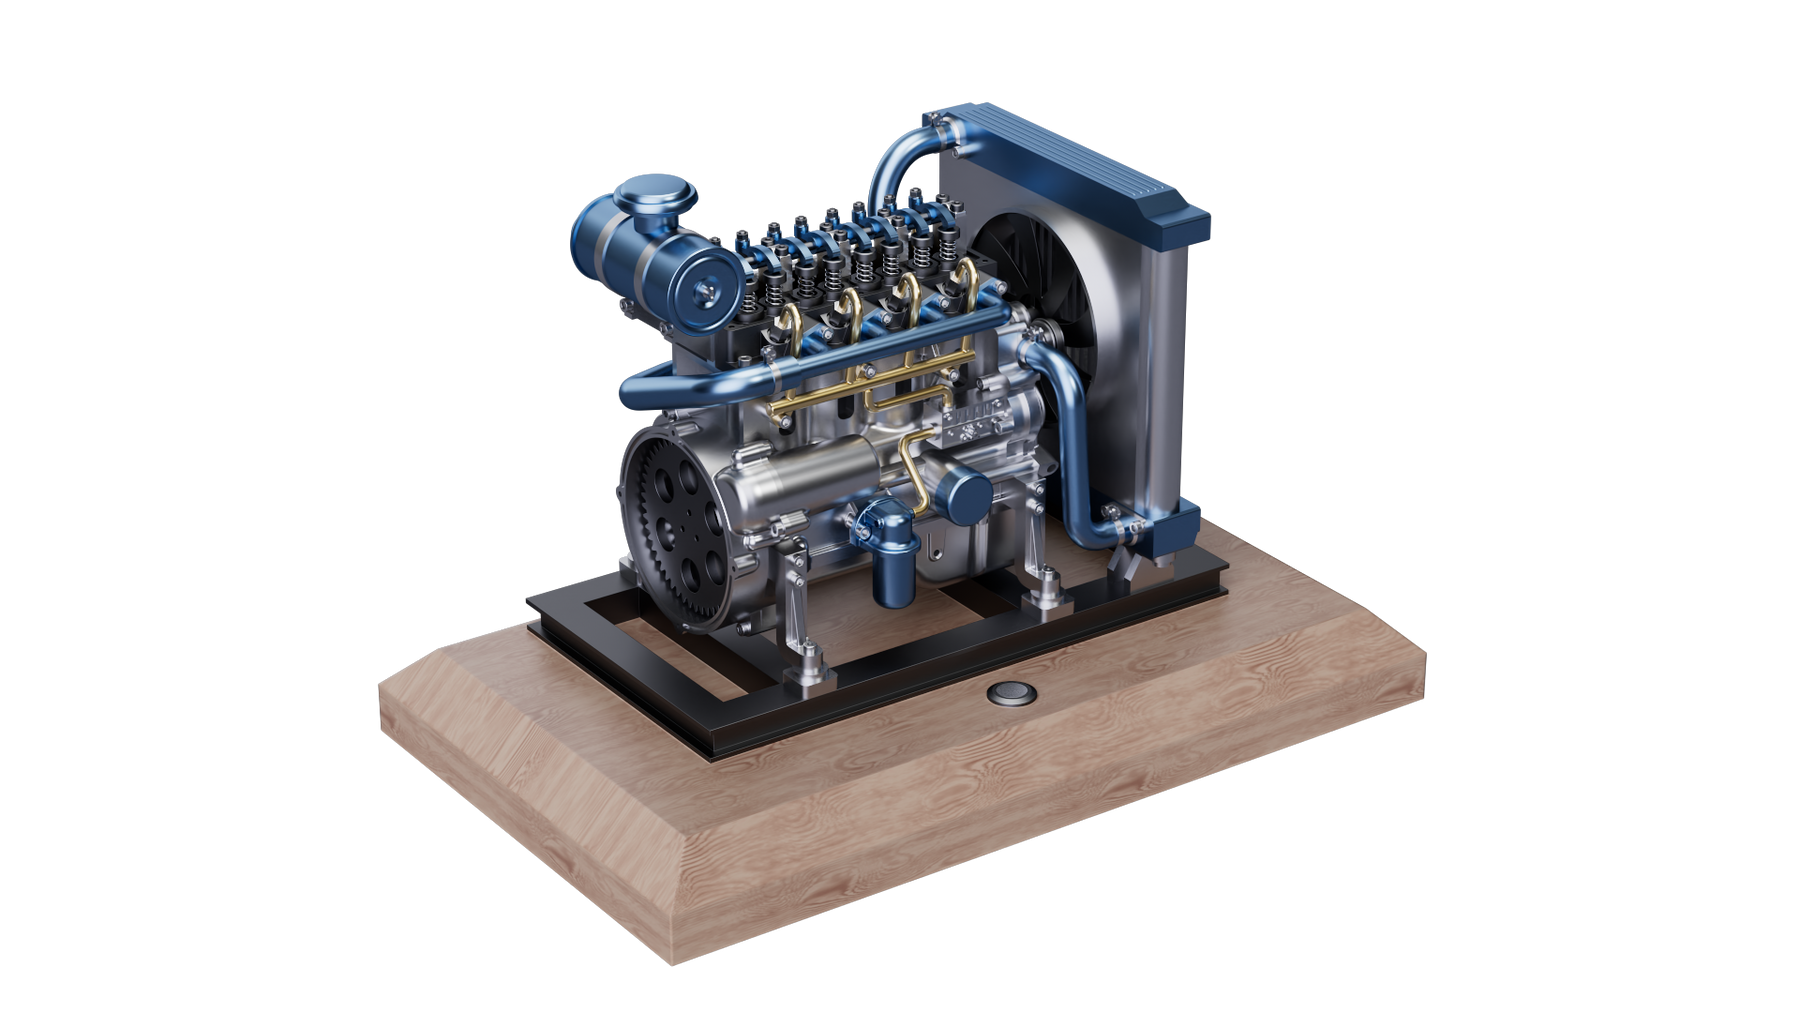 TECHING Newest L4 Engine Model That Works - EngineDIY